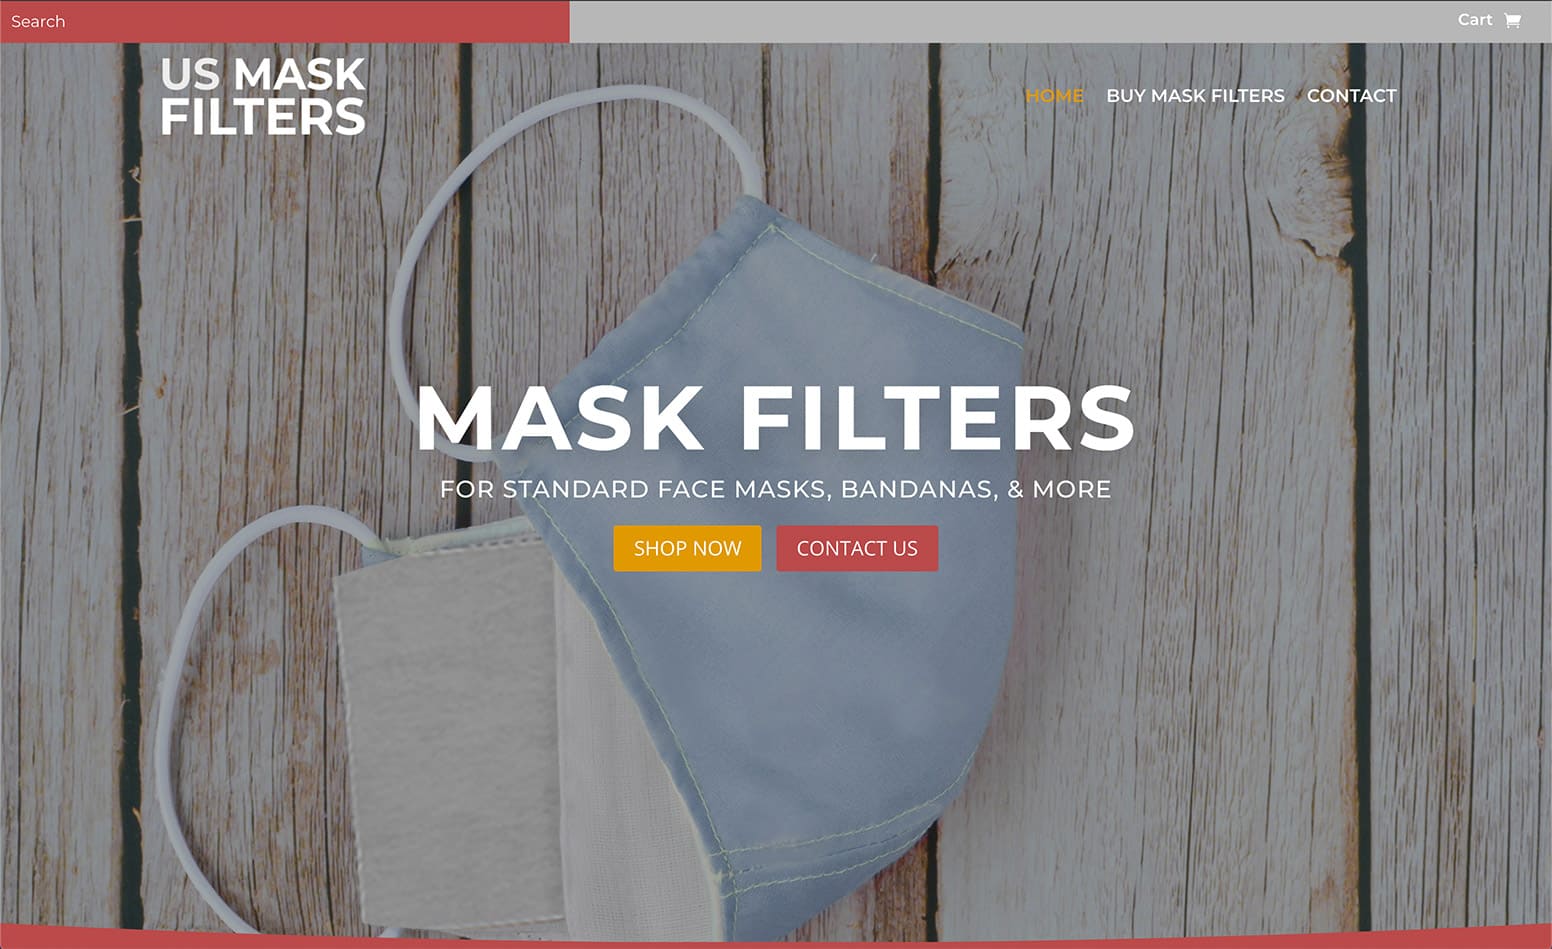 US Mask filters website, web design MA, web design CT, graphic design MA, branding MA, social media marketing